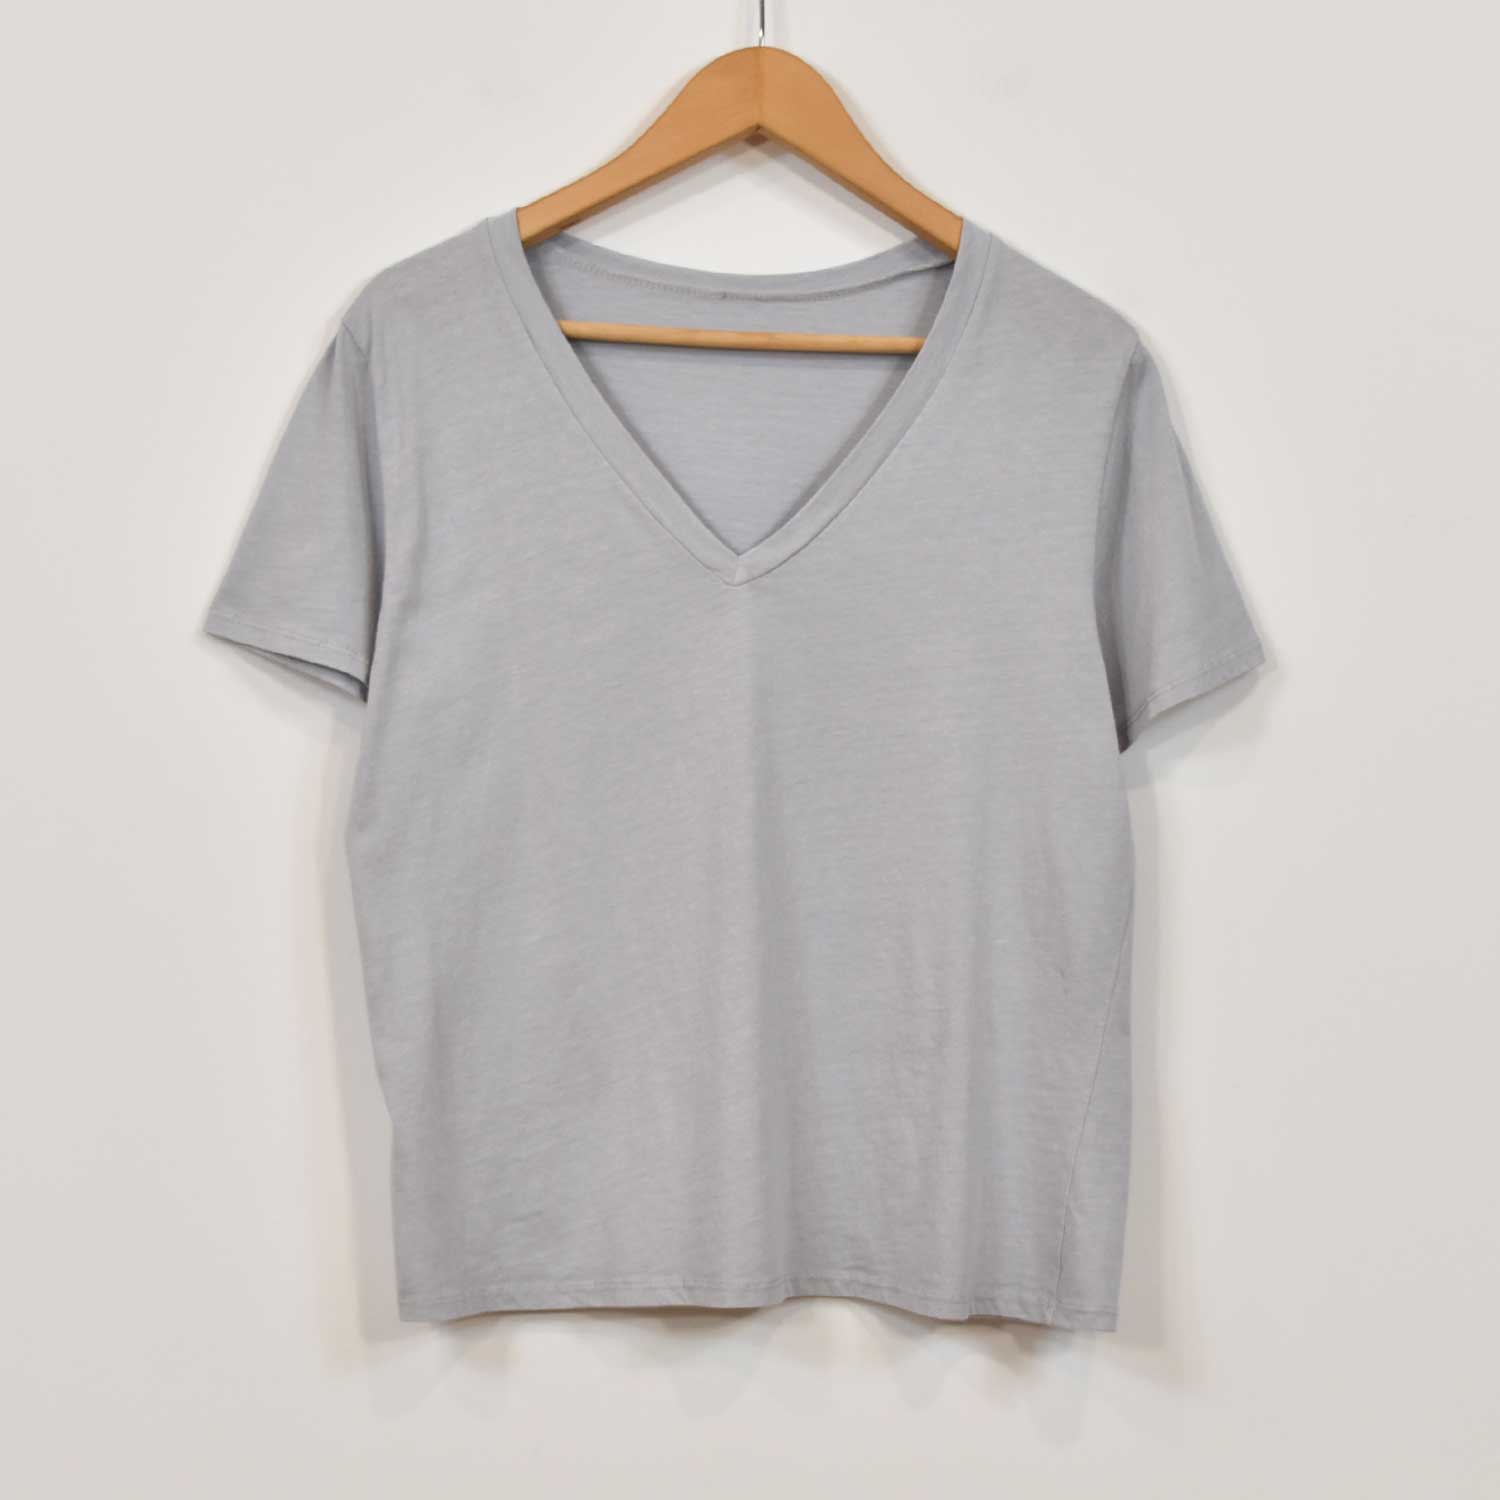 Grey básic T-shirt